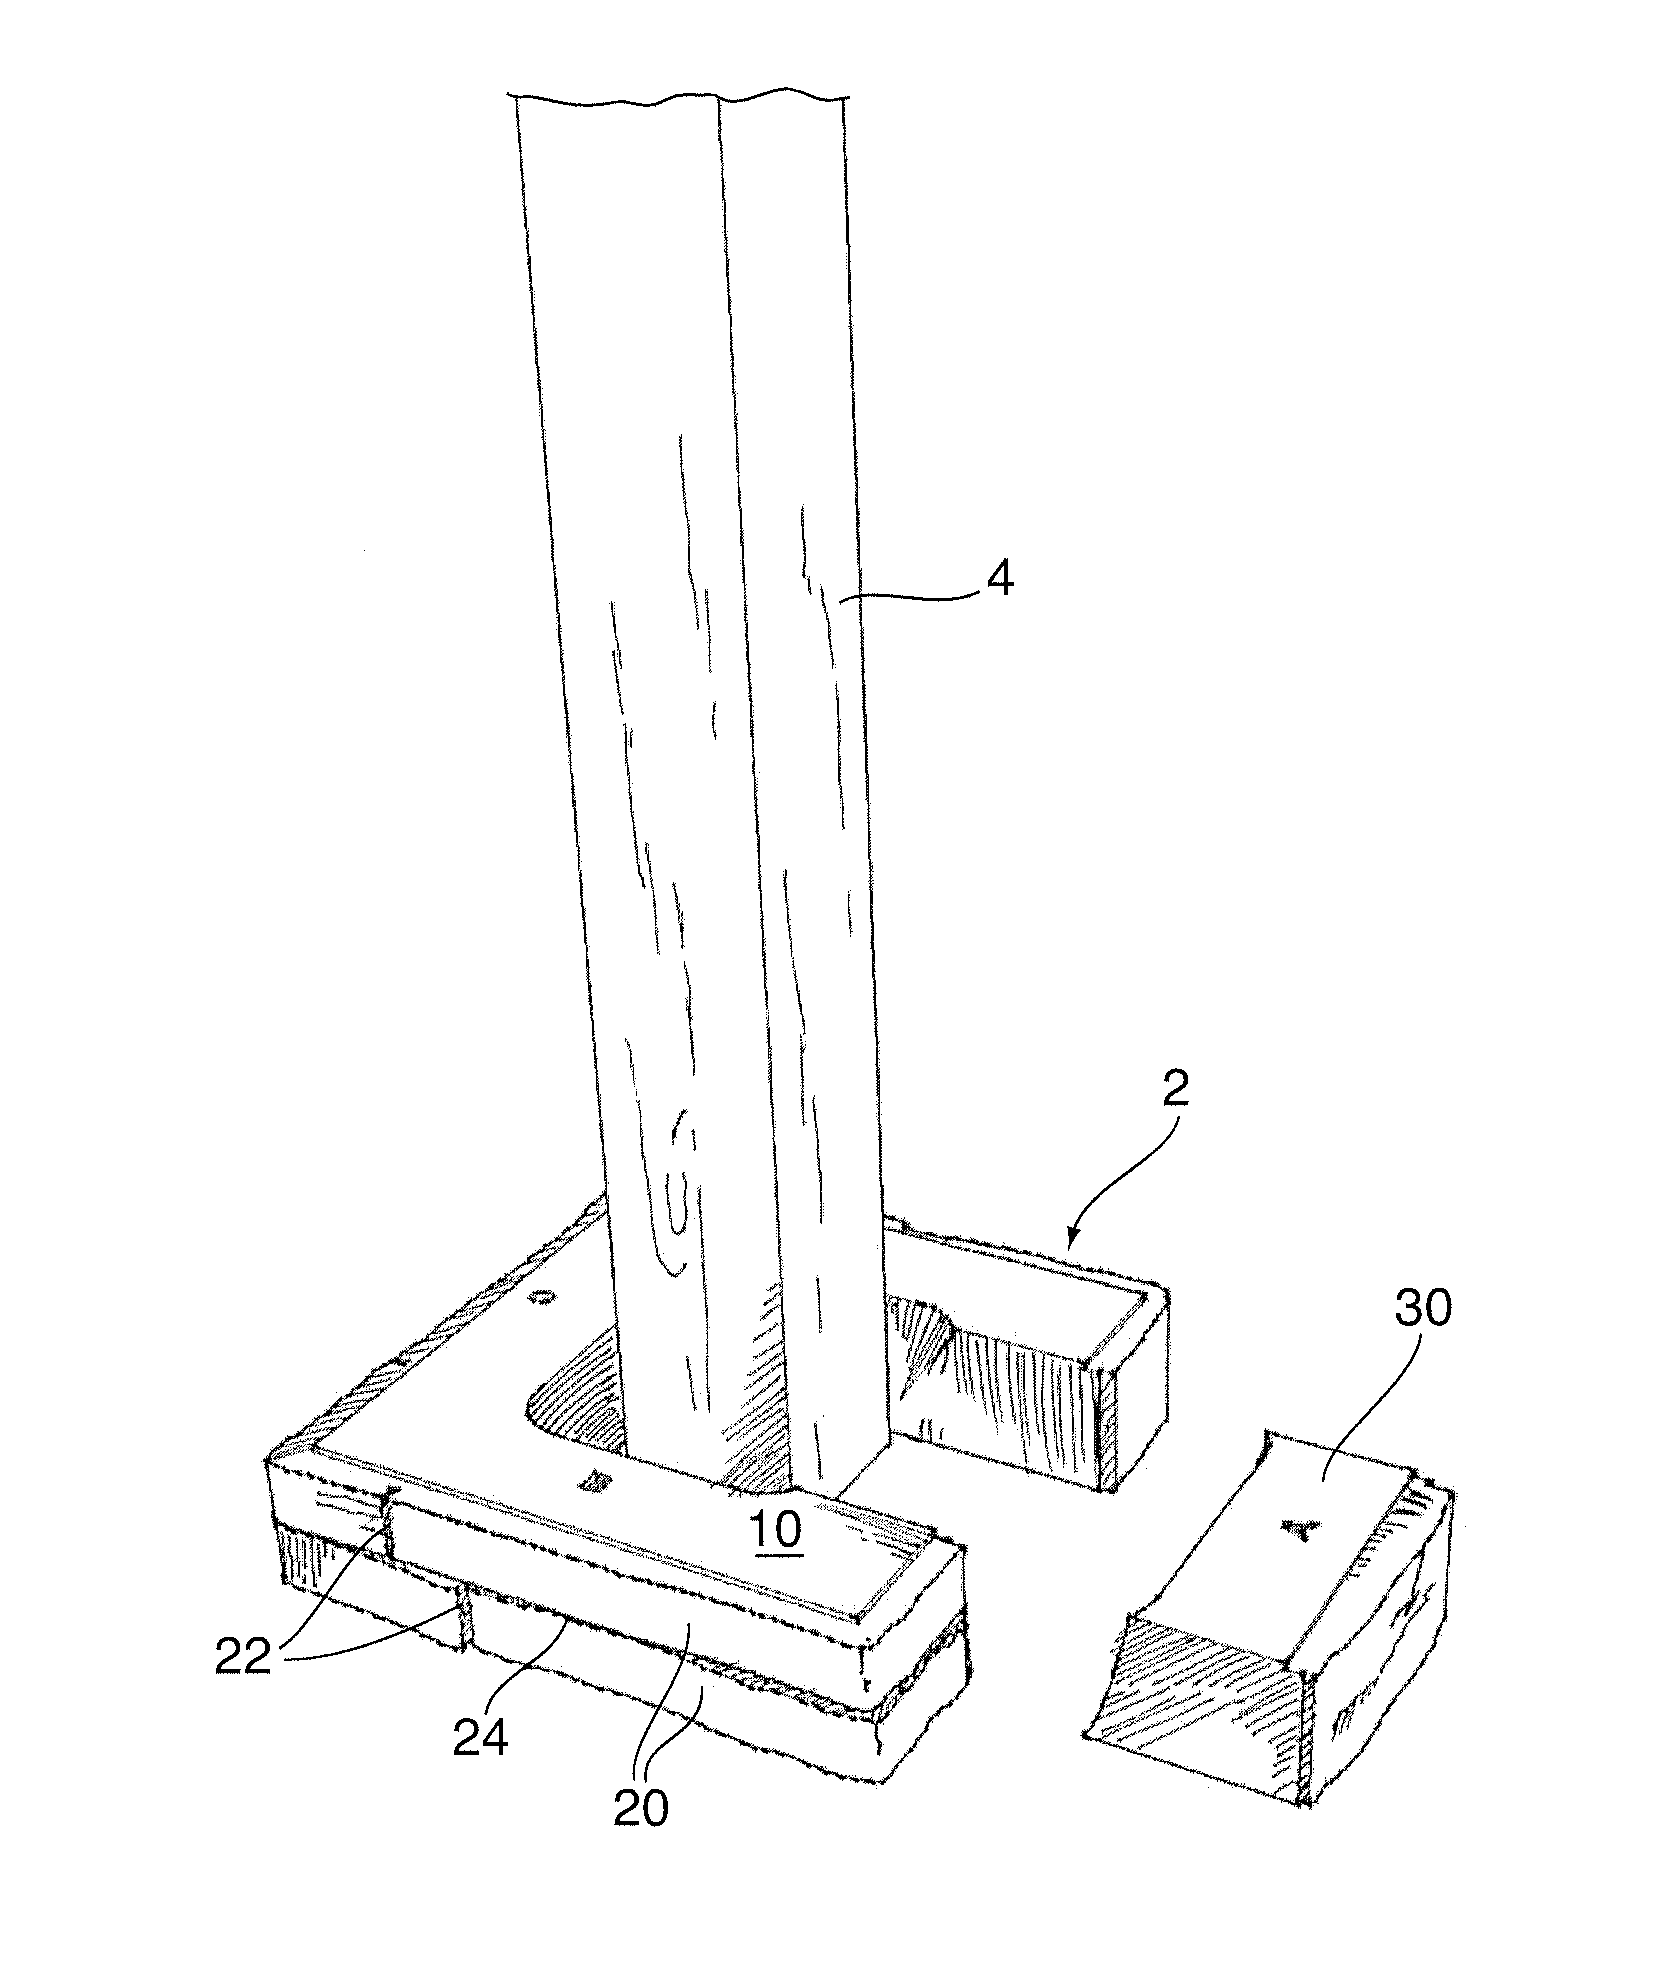 Prefabricated pillar slab system